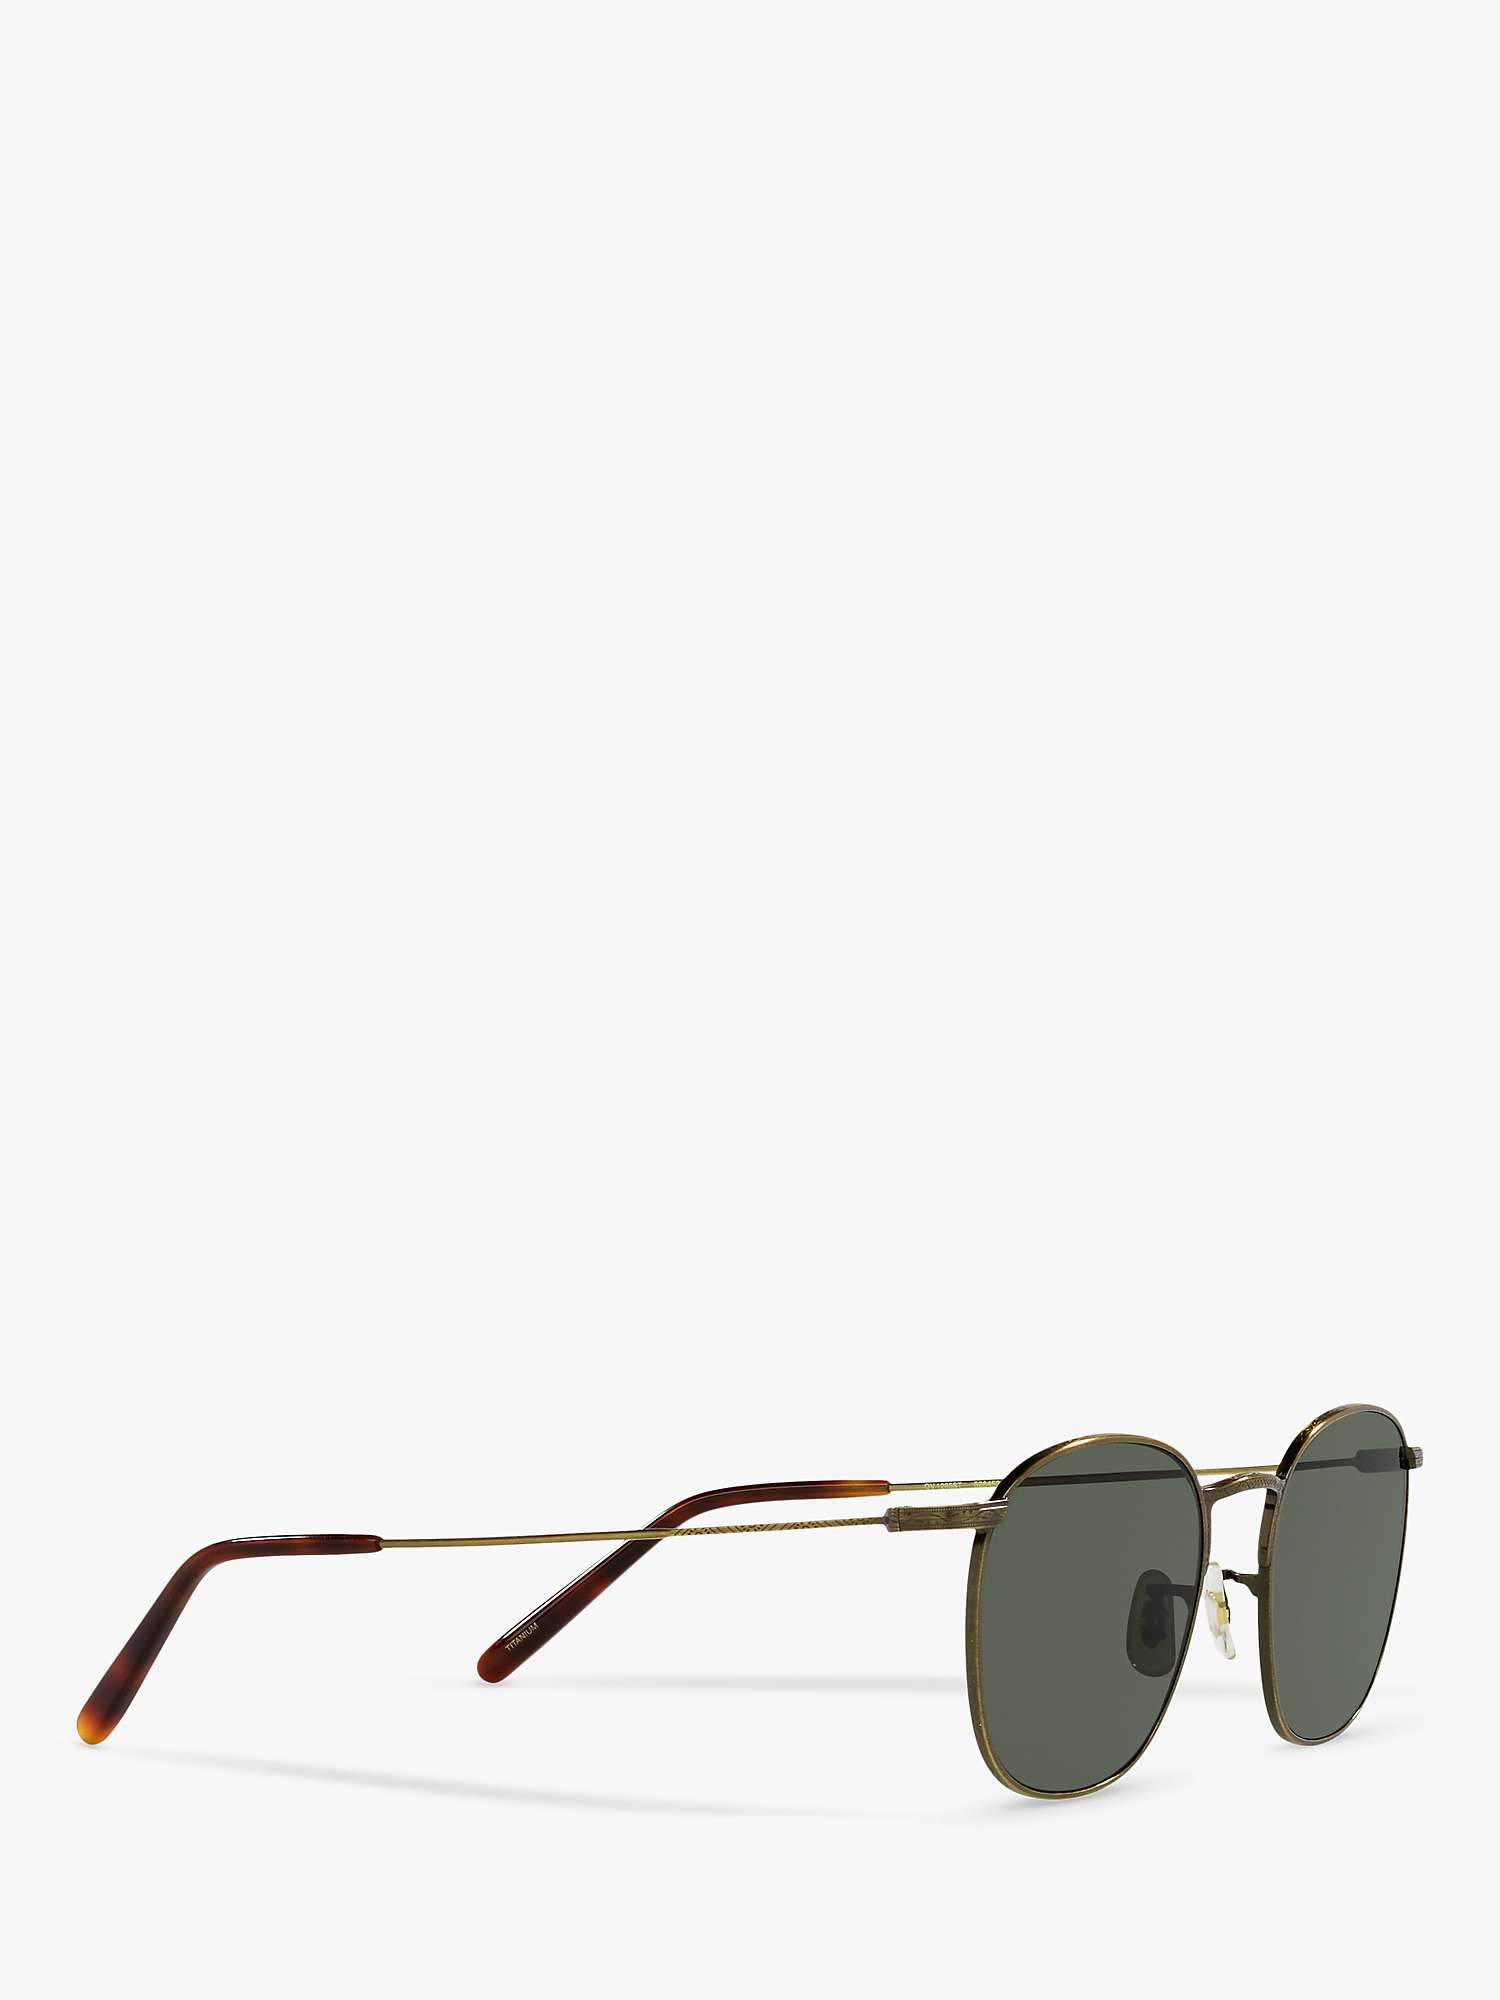 Buy Oliver Peoples OV1285ST Men's Goldsen Sun Sunglasses, Antique Gold/Dark Green Online at johnlewis.com